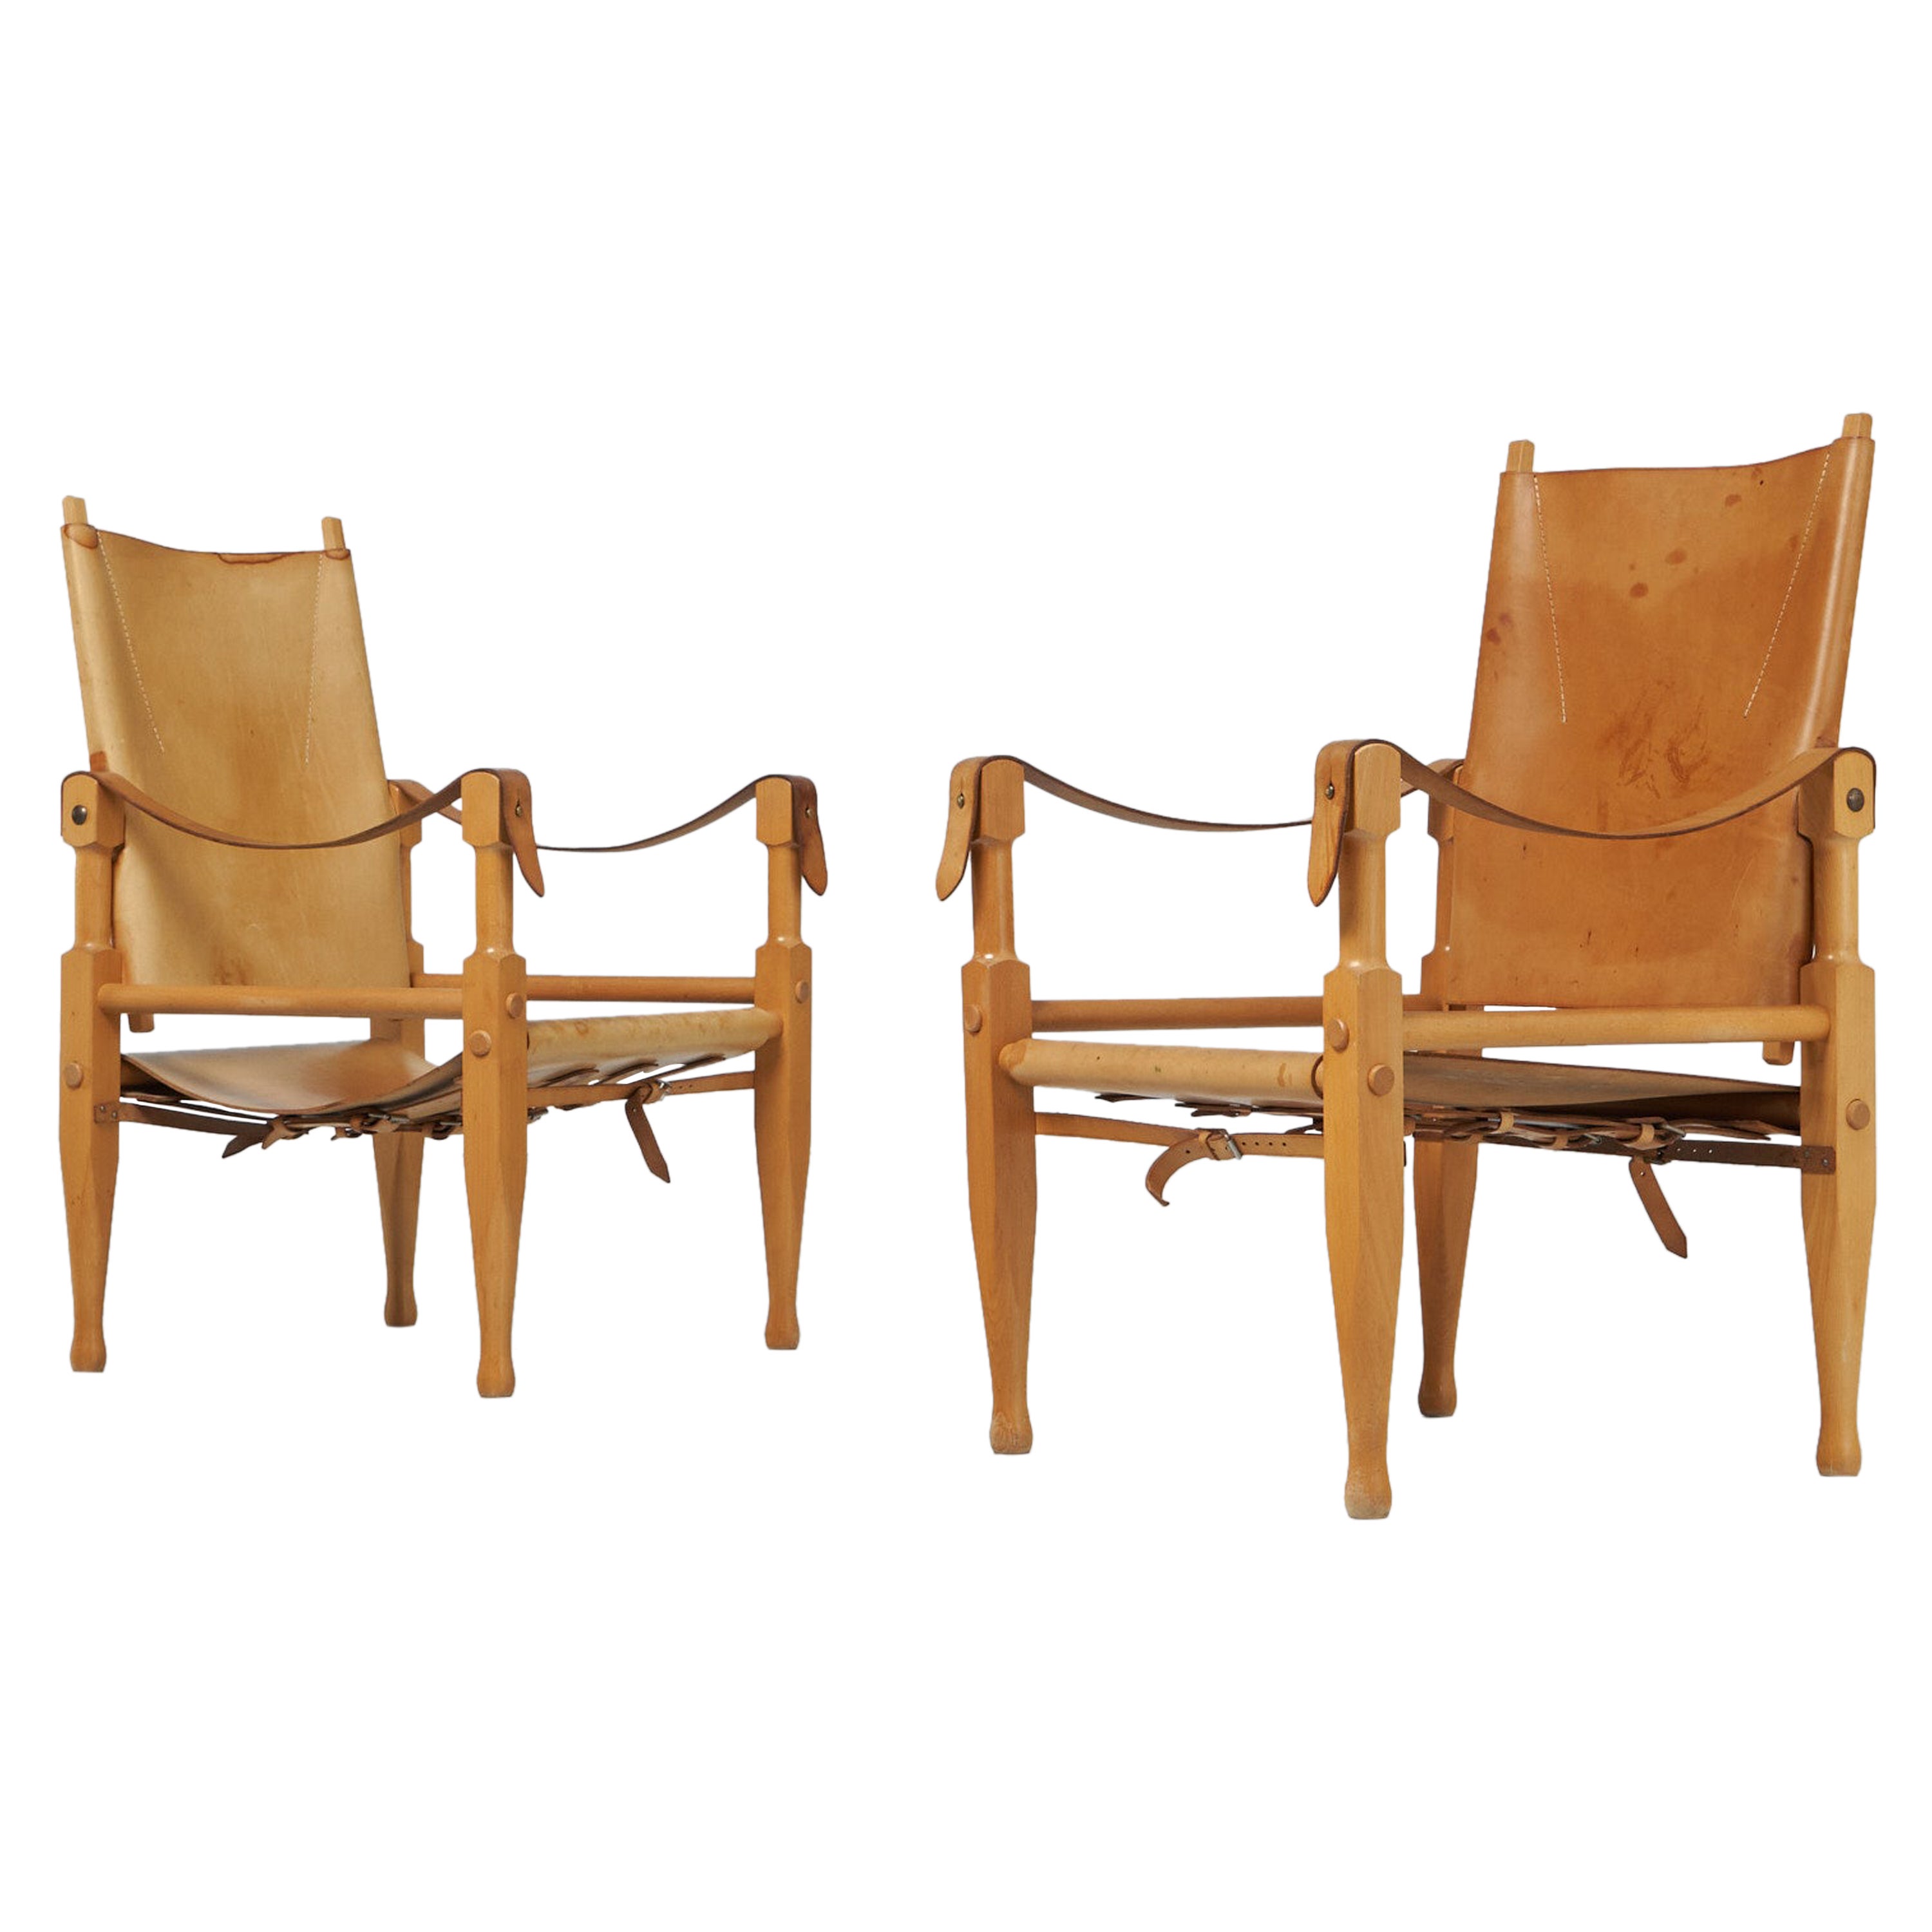 Wilhelm Kienzle Safari Chairs, Switzerland, 1950 For Sale